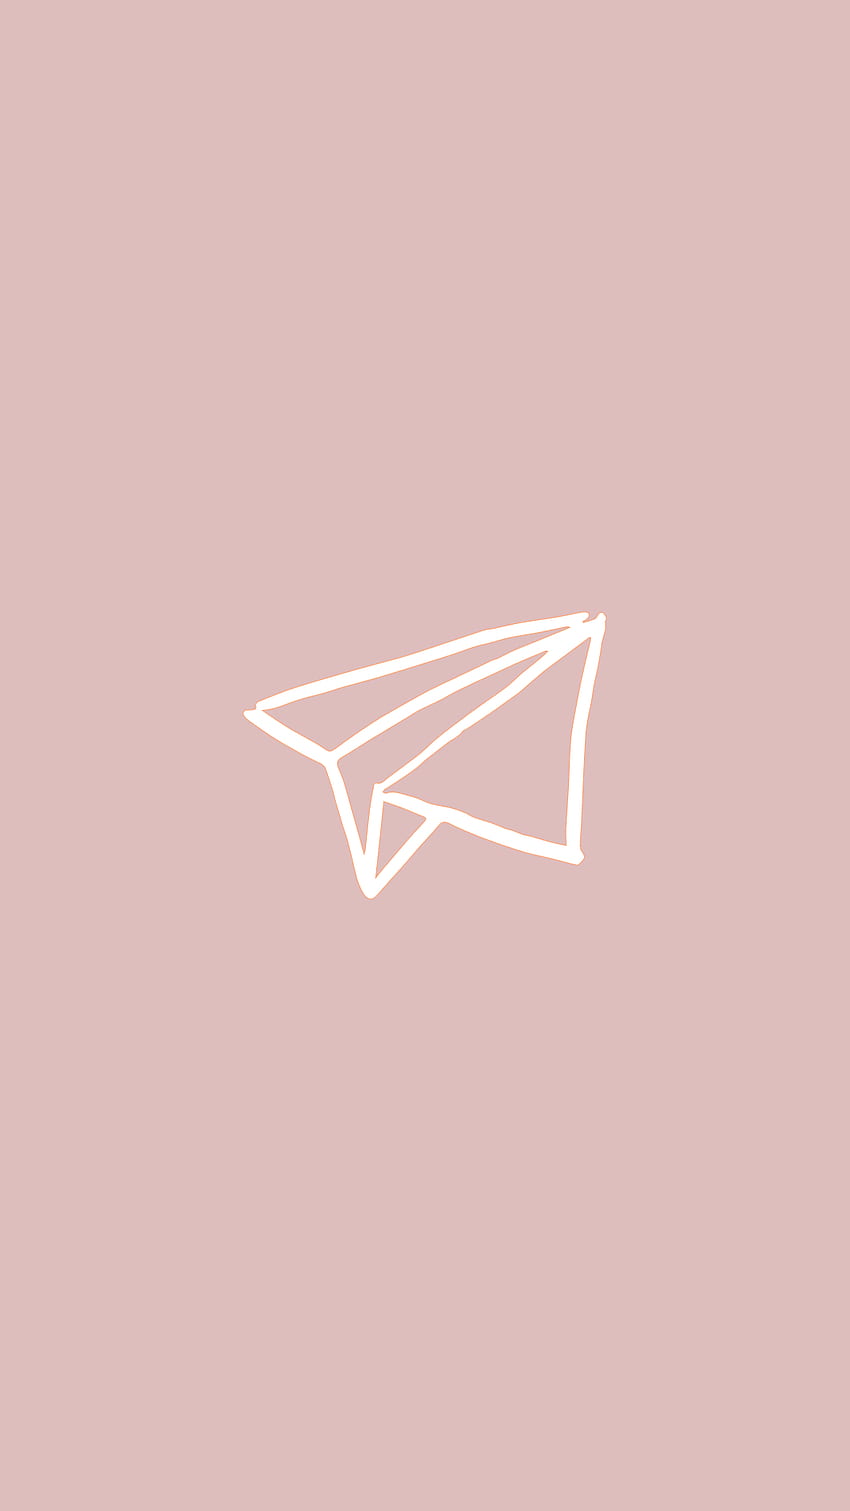 portada destacada de instagram de avión de papel. hipster de iPhone, avión de papel, iconos destacados de Instagram, lindo avión de papel fondo de pantalla del teléfono